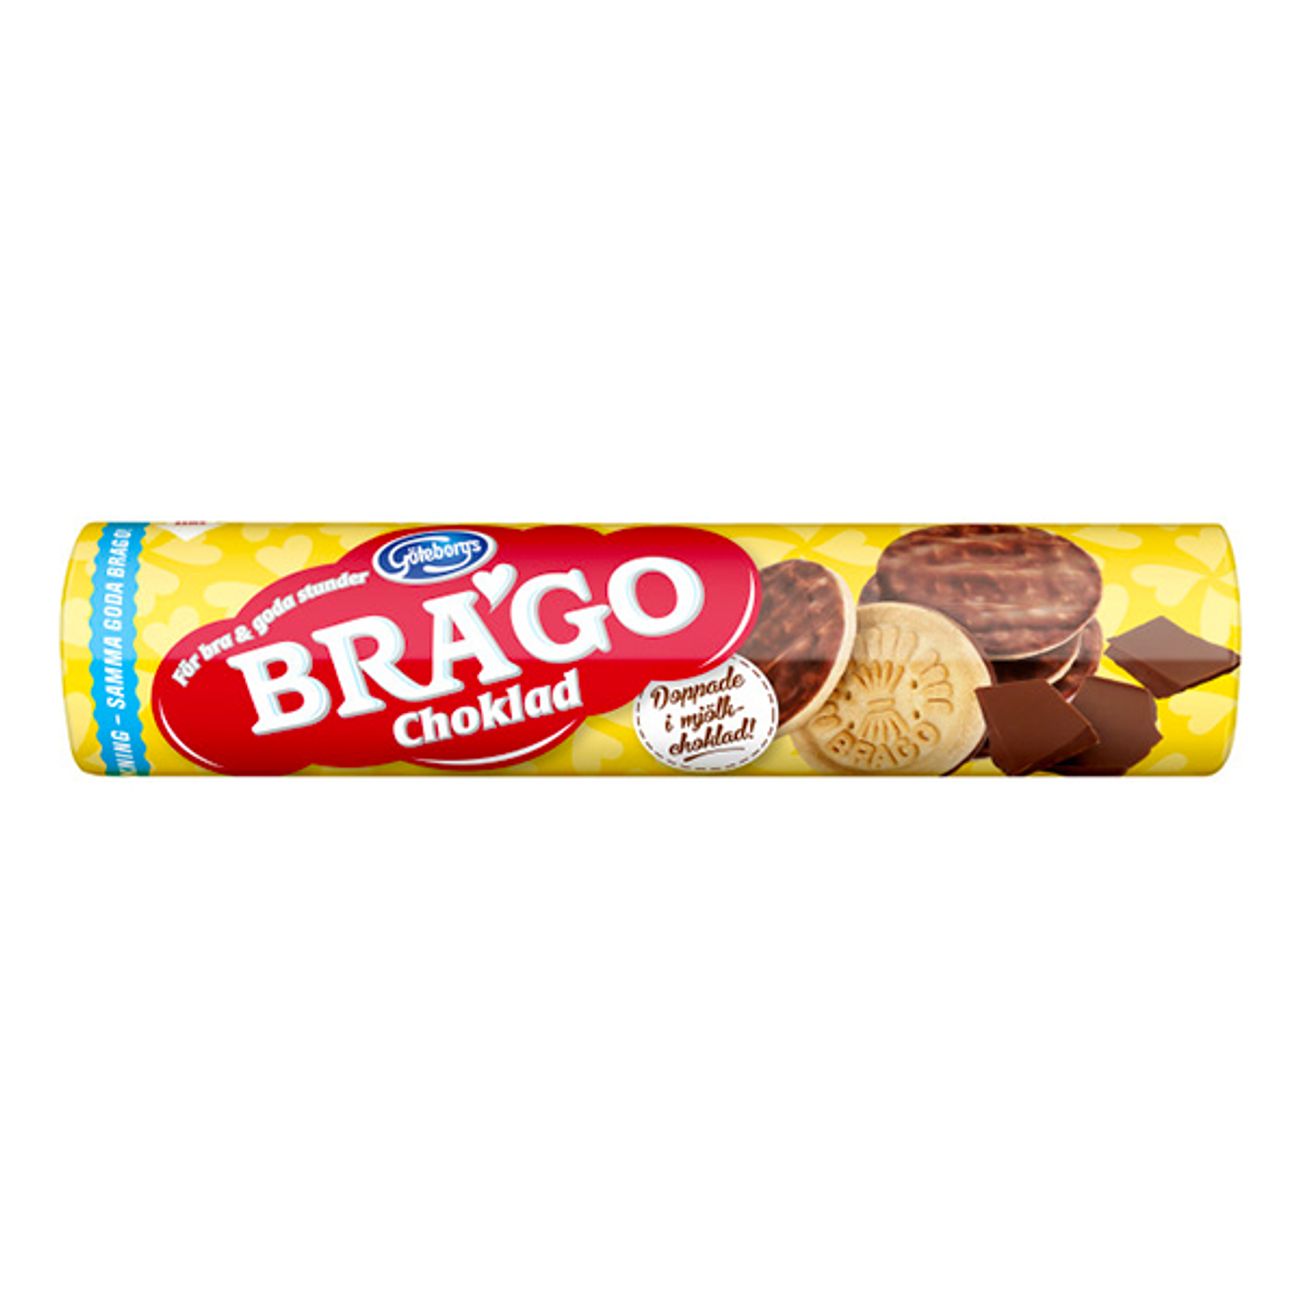 brago-kex-choklad-78579-1